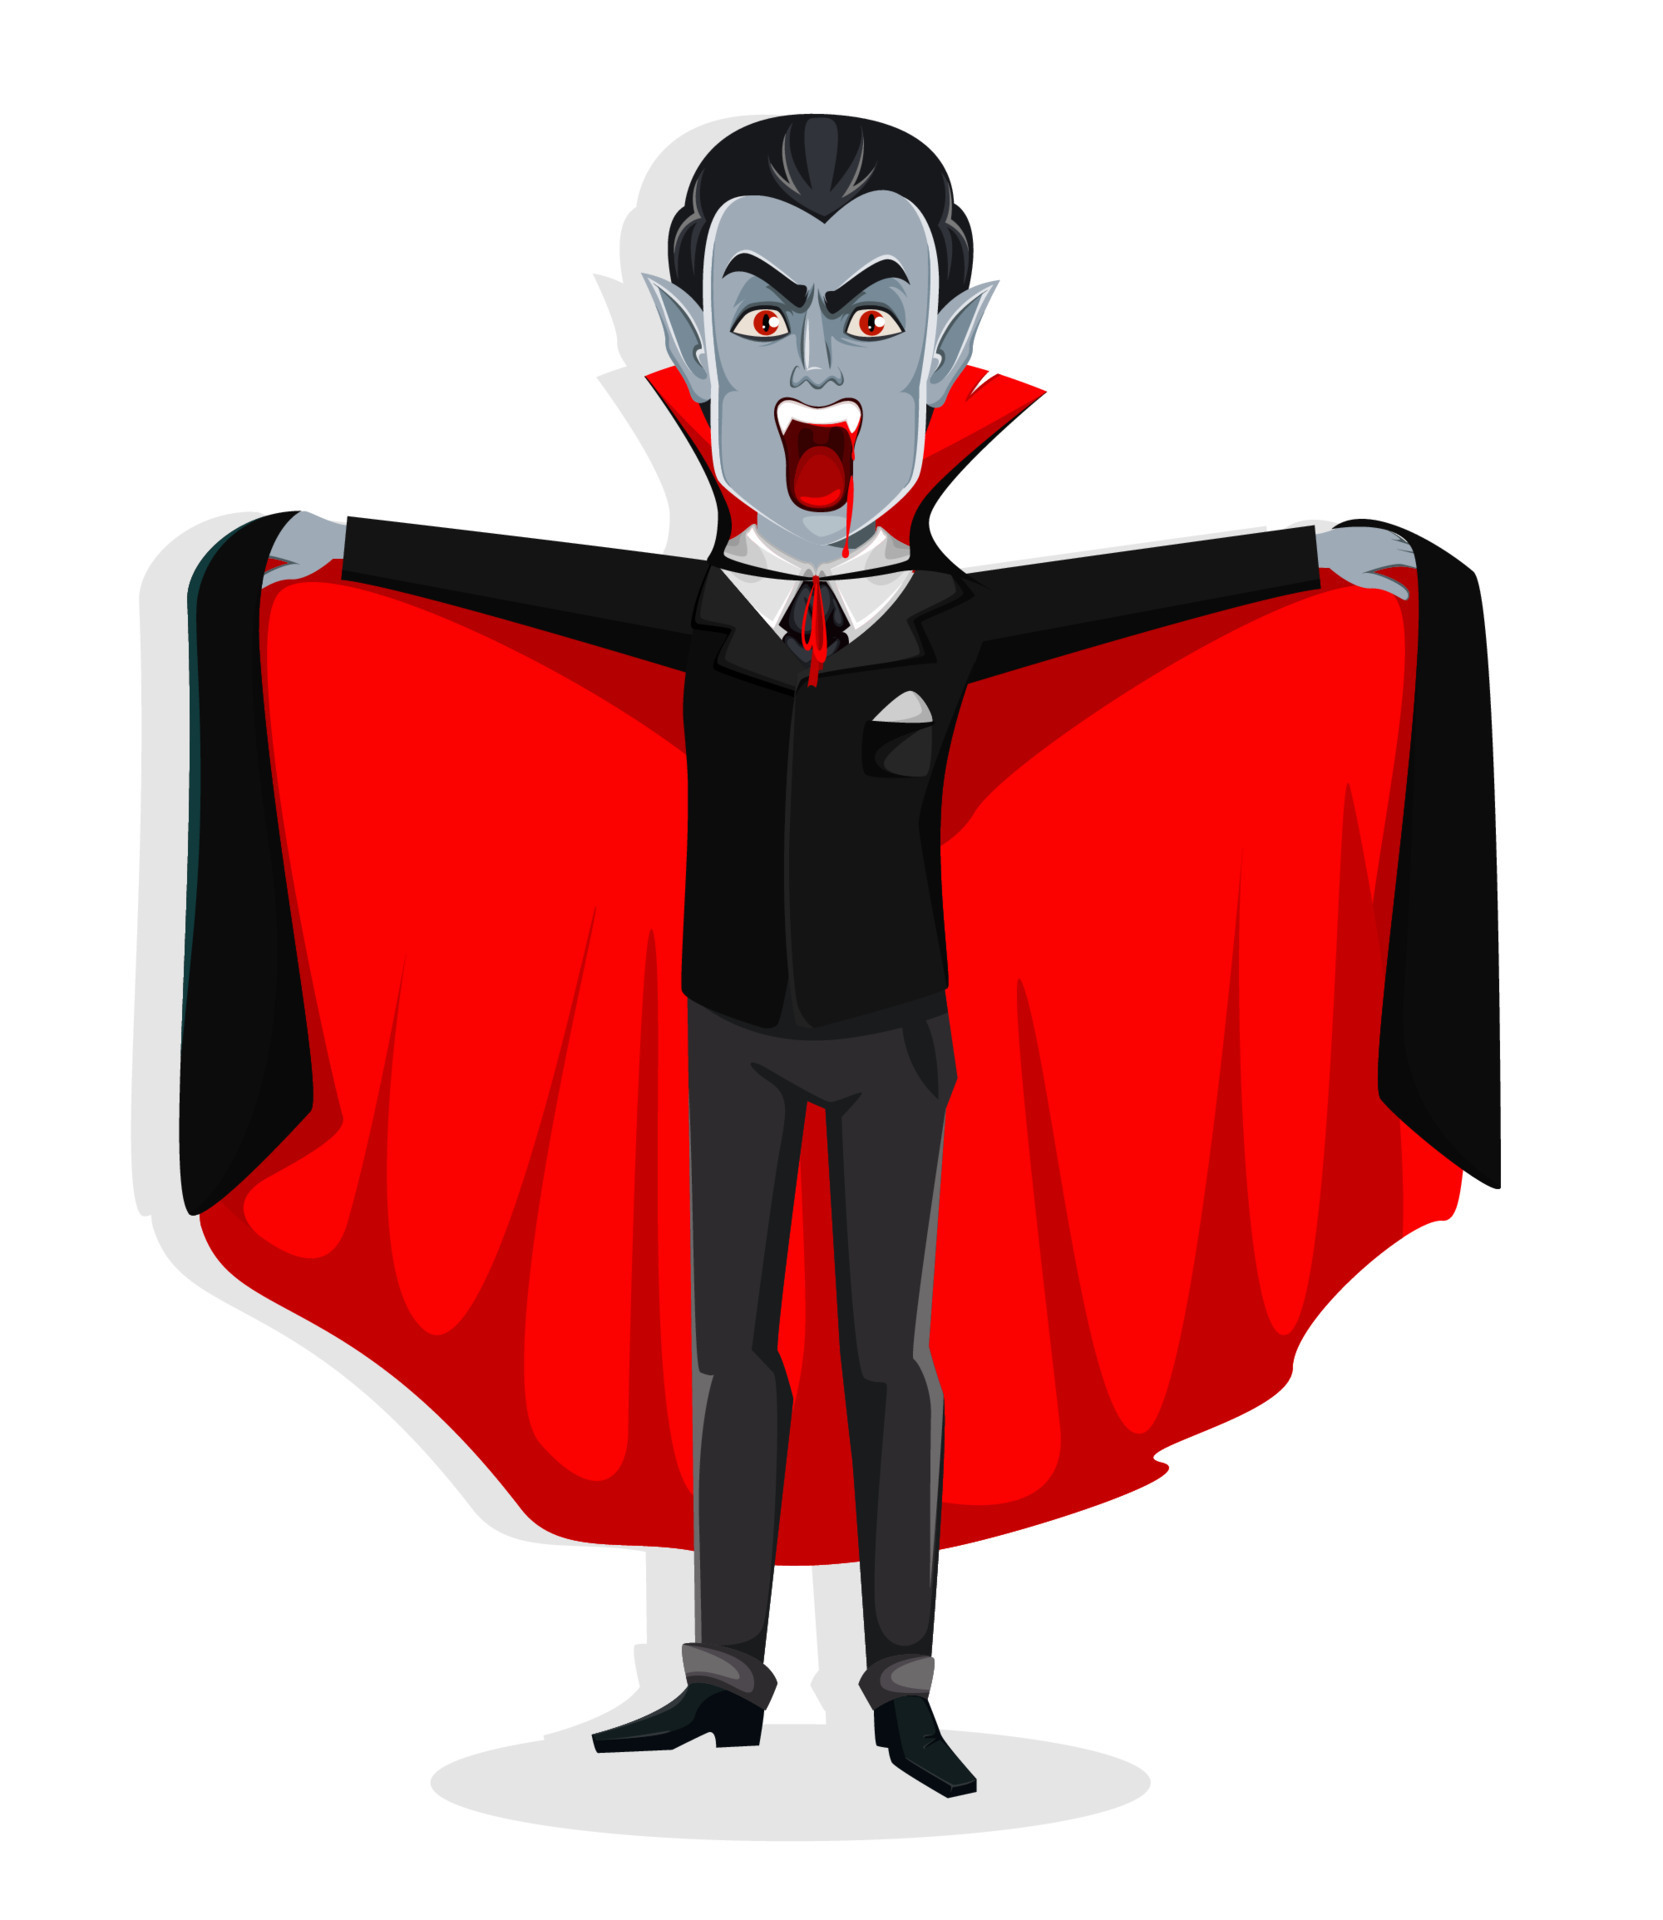 Vampiro de desenho animado com vampiro realista de corpo inteiro